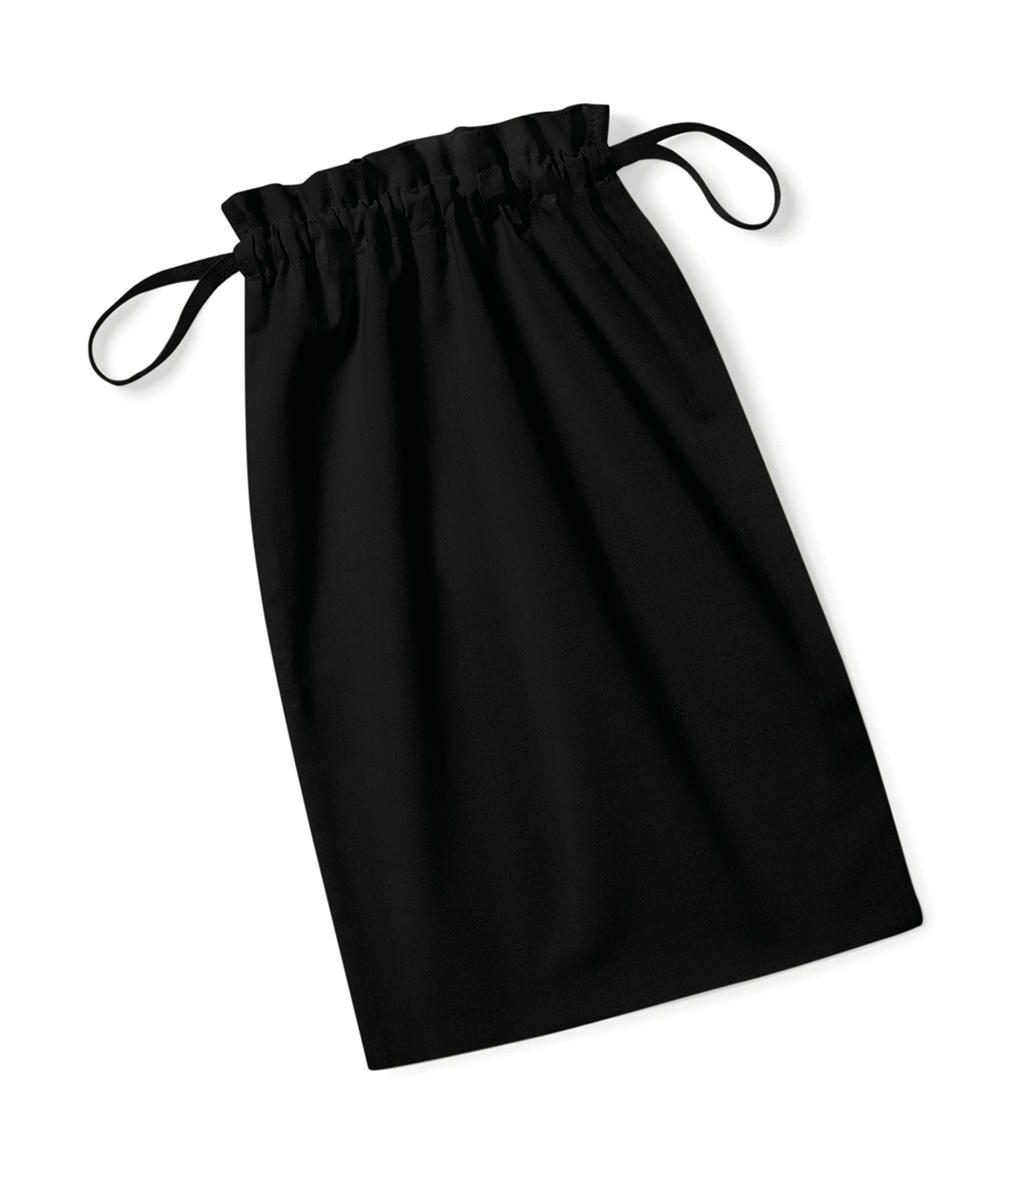  Organic Cotton Drawcord Bag in Farbe Black